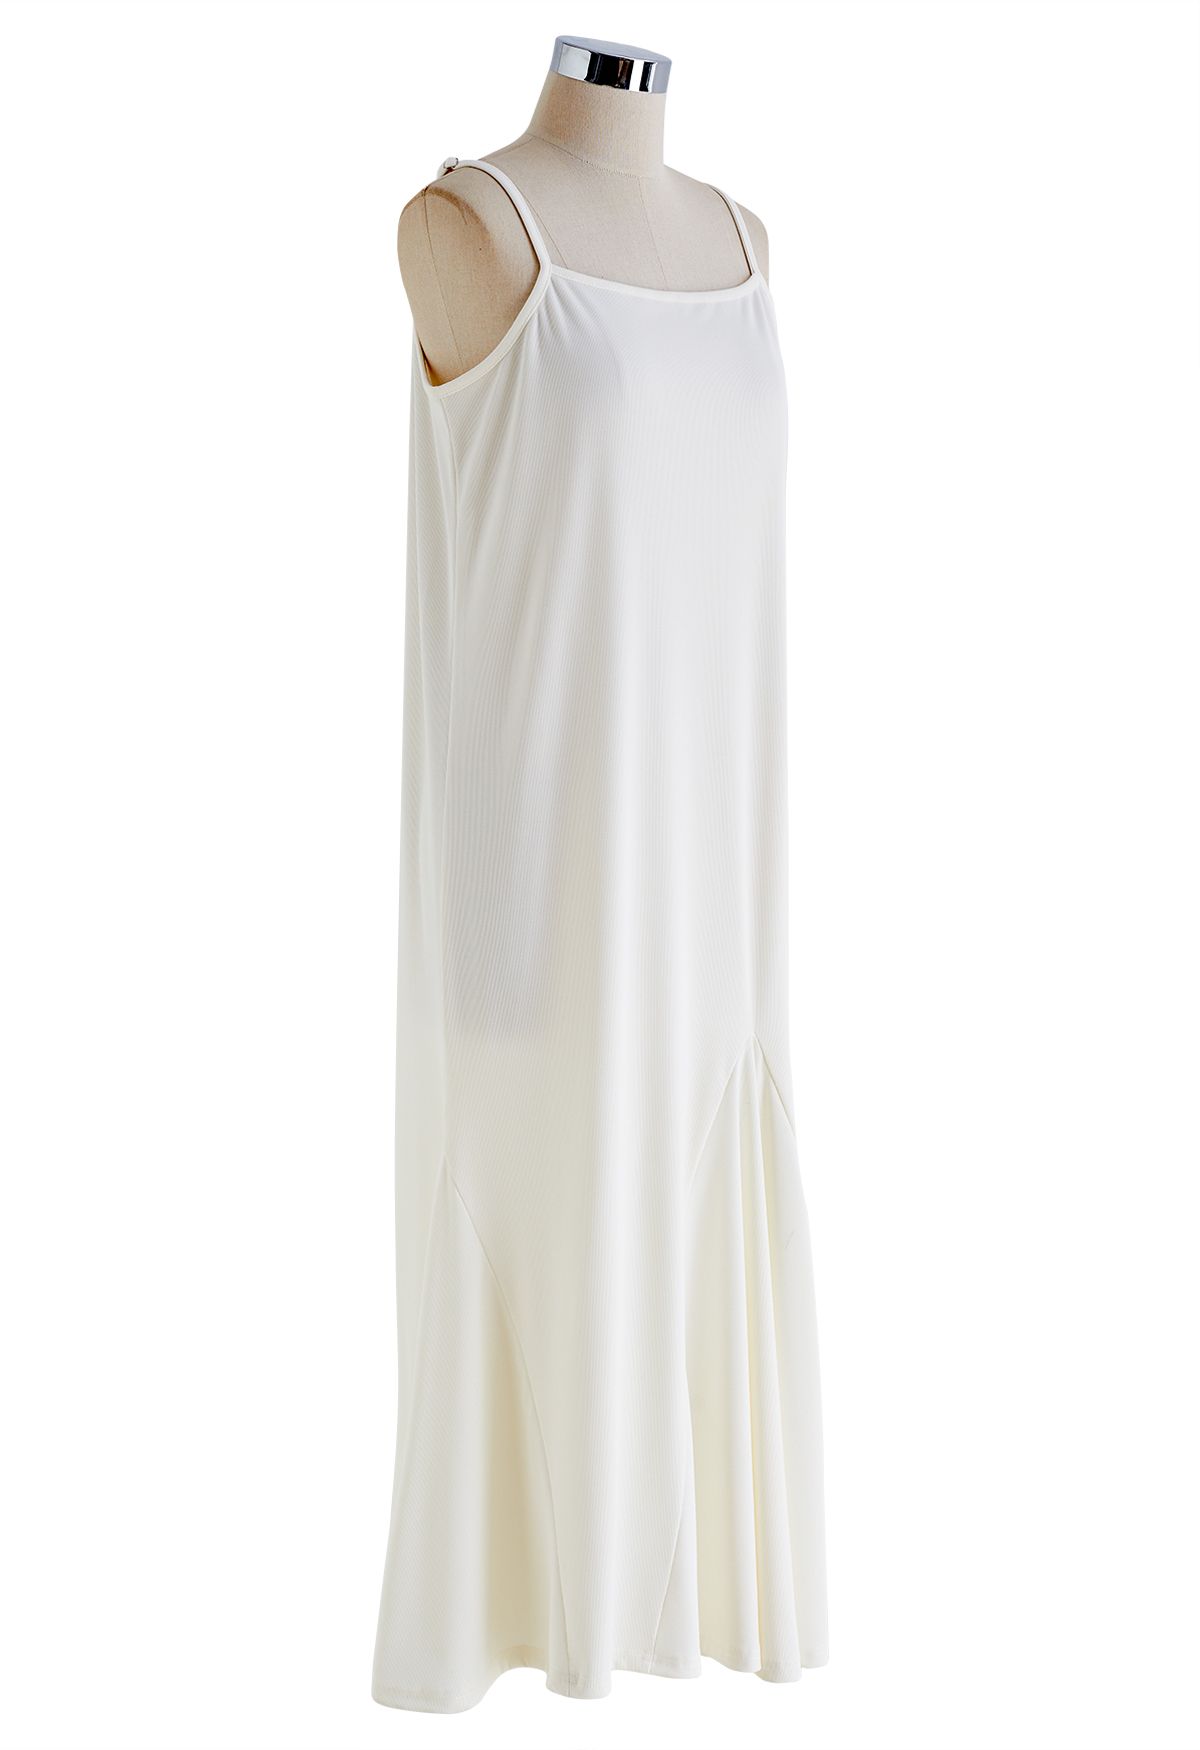 Plain Color Frilling Hem Cami Dress in Cream